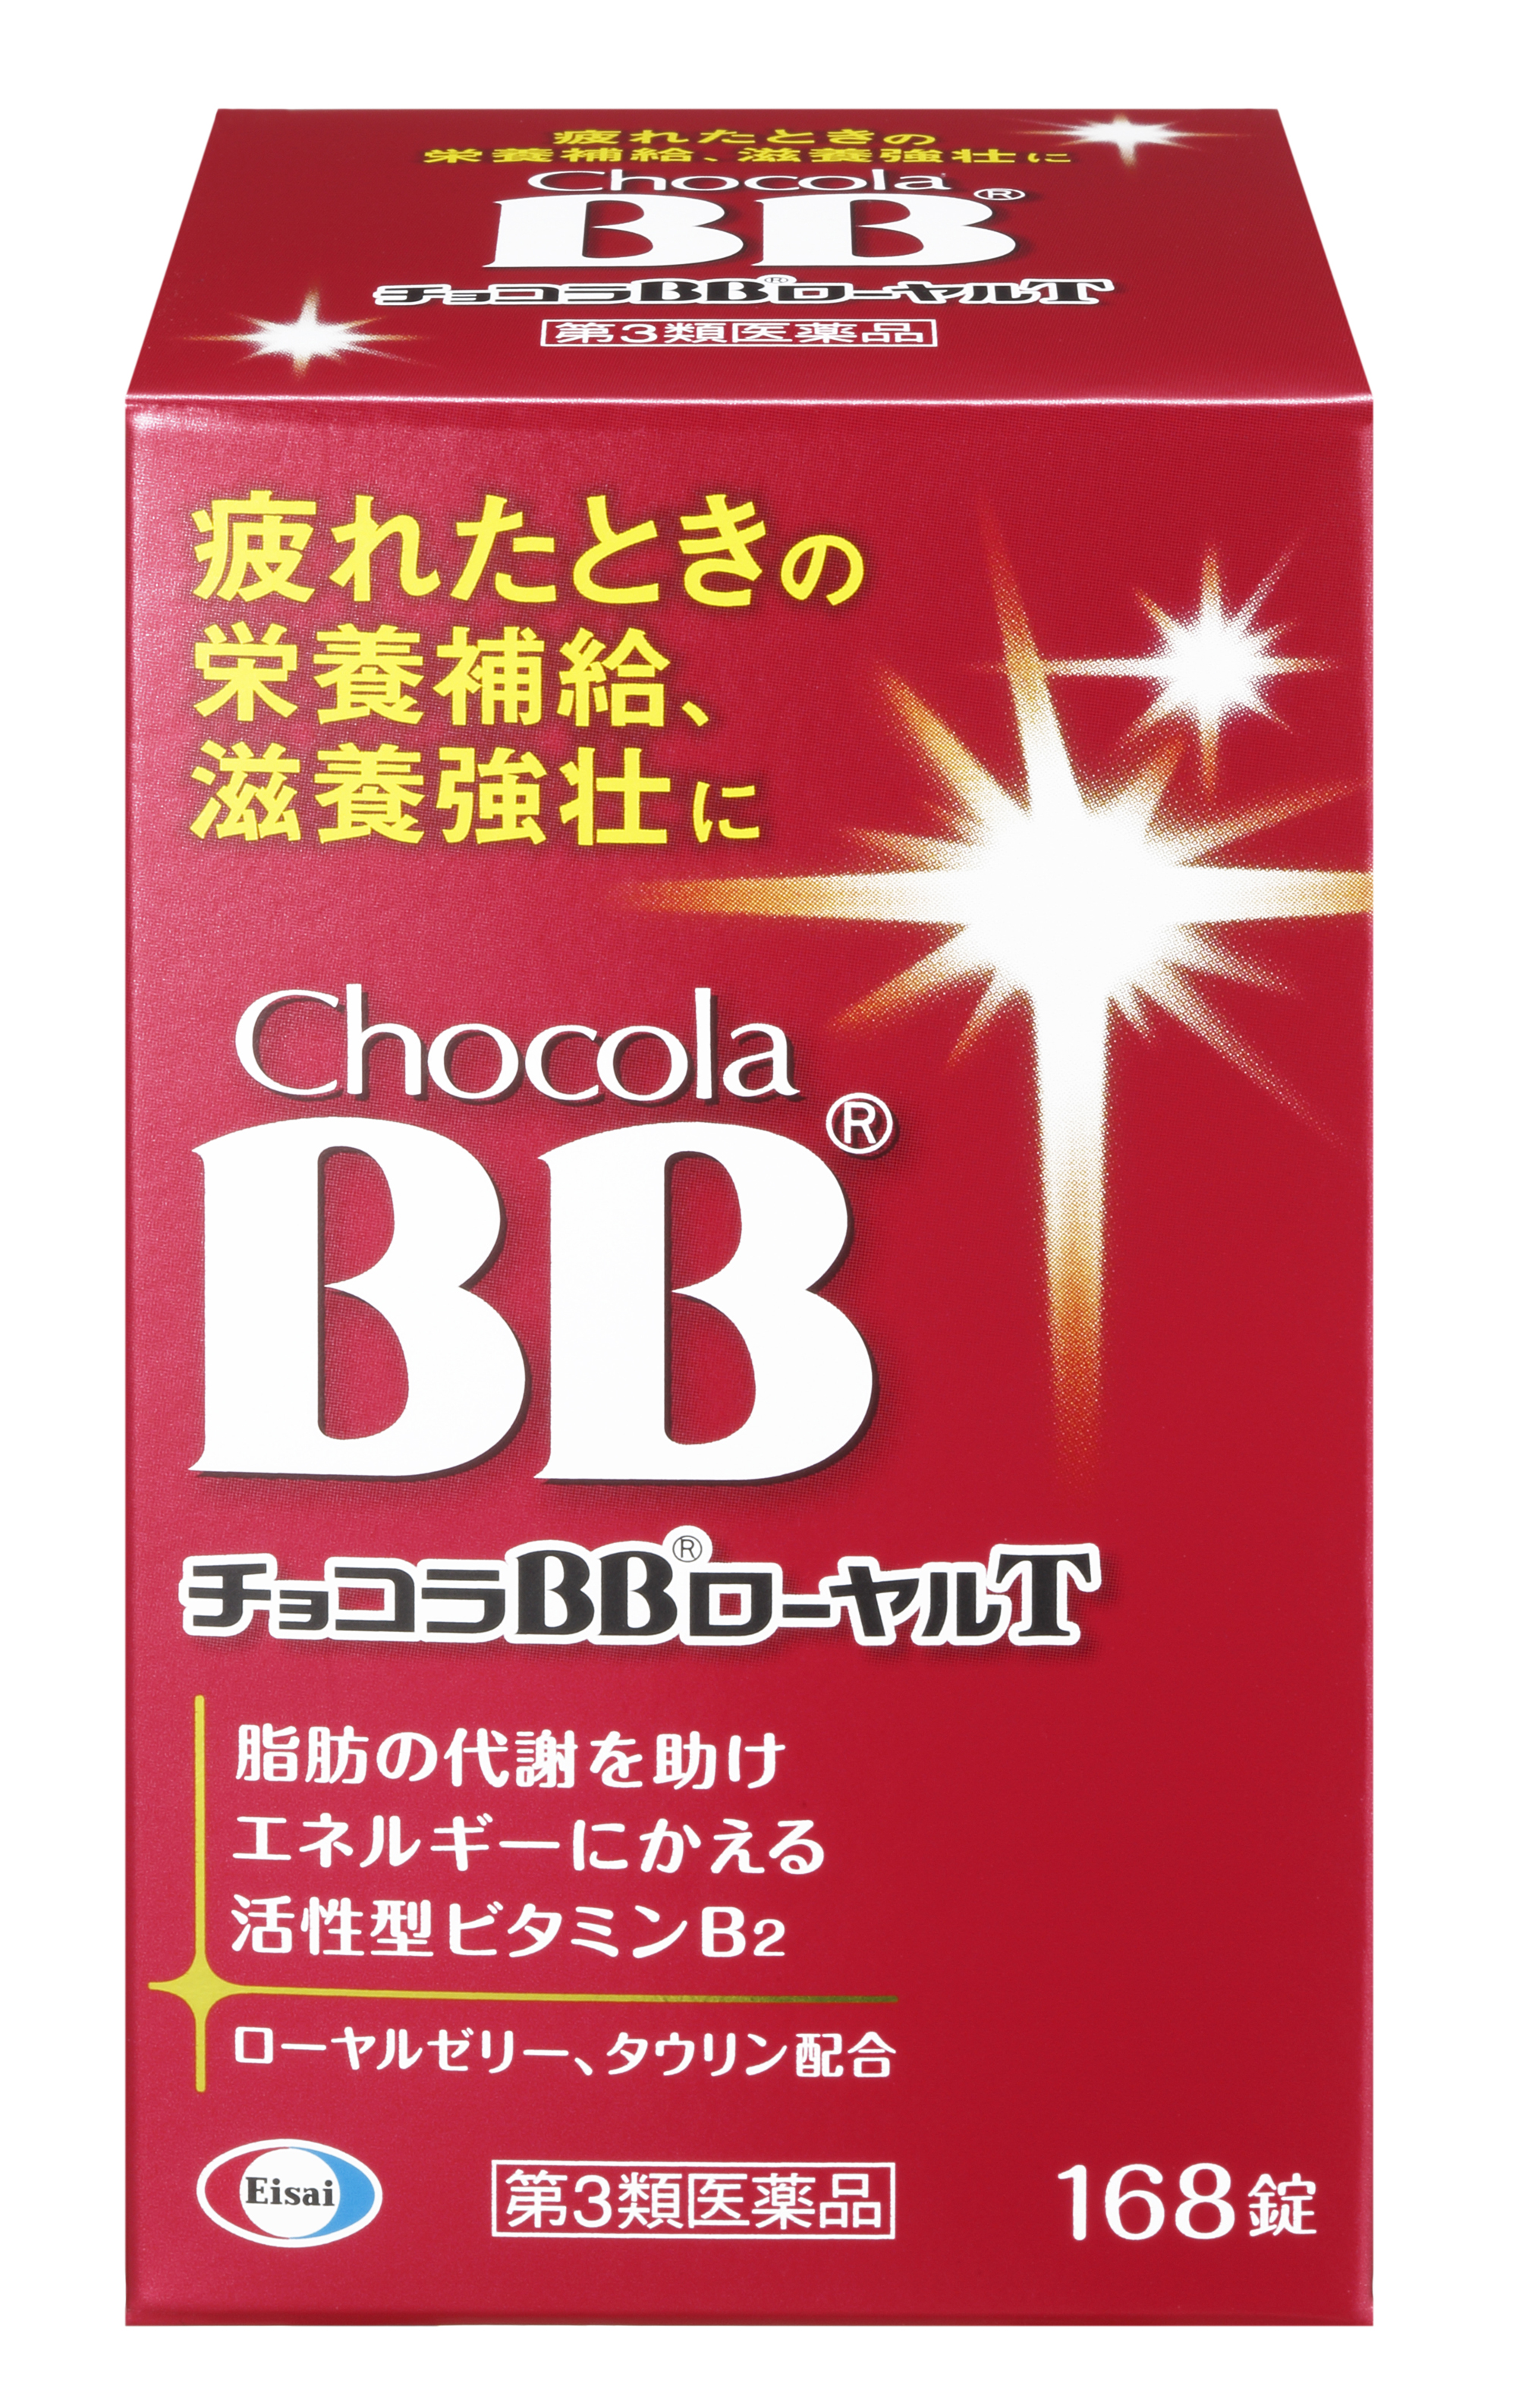 Chocola BB Royal T